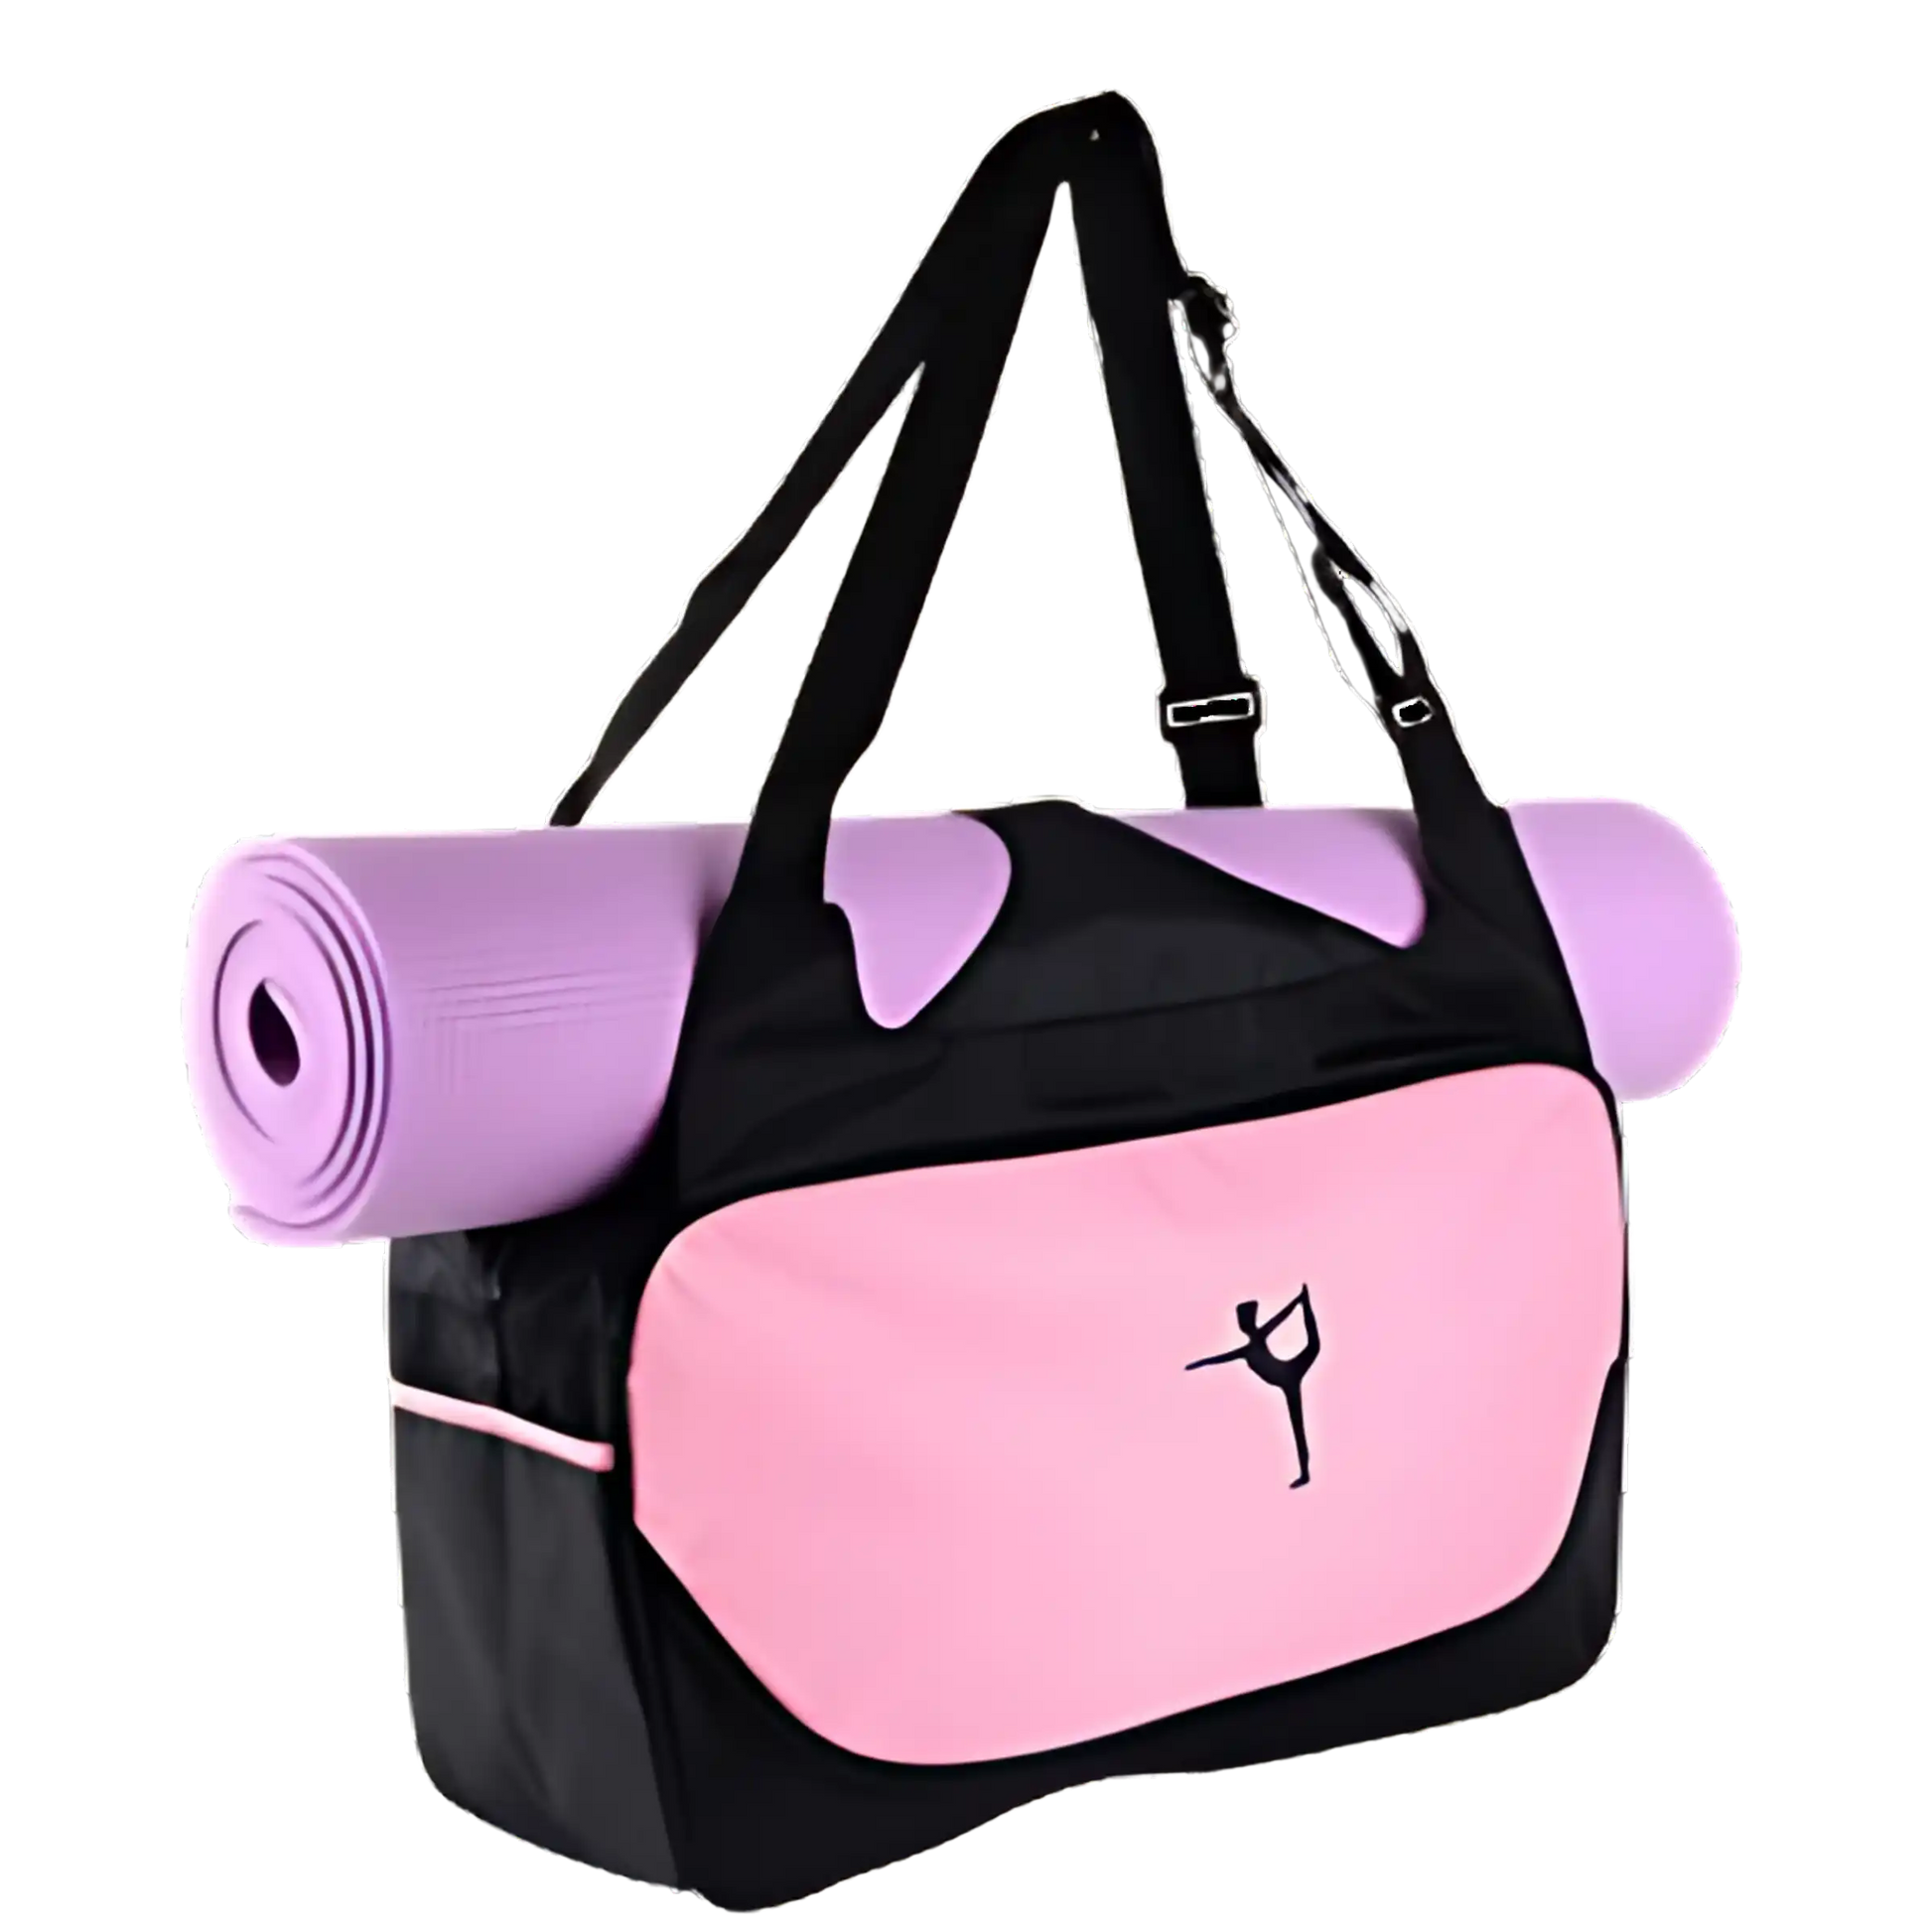 WATERPROOF YOGA MAT CARRIER BACKPACK - Light pink - Yoga Bag